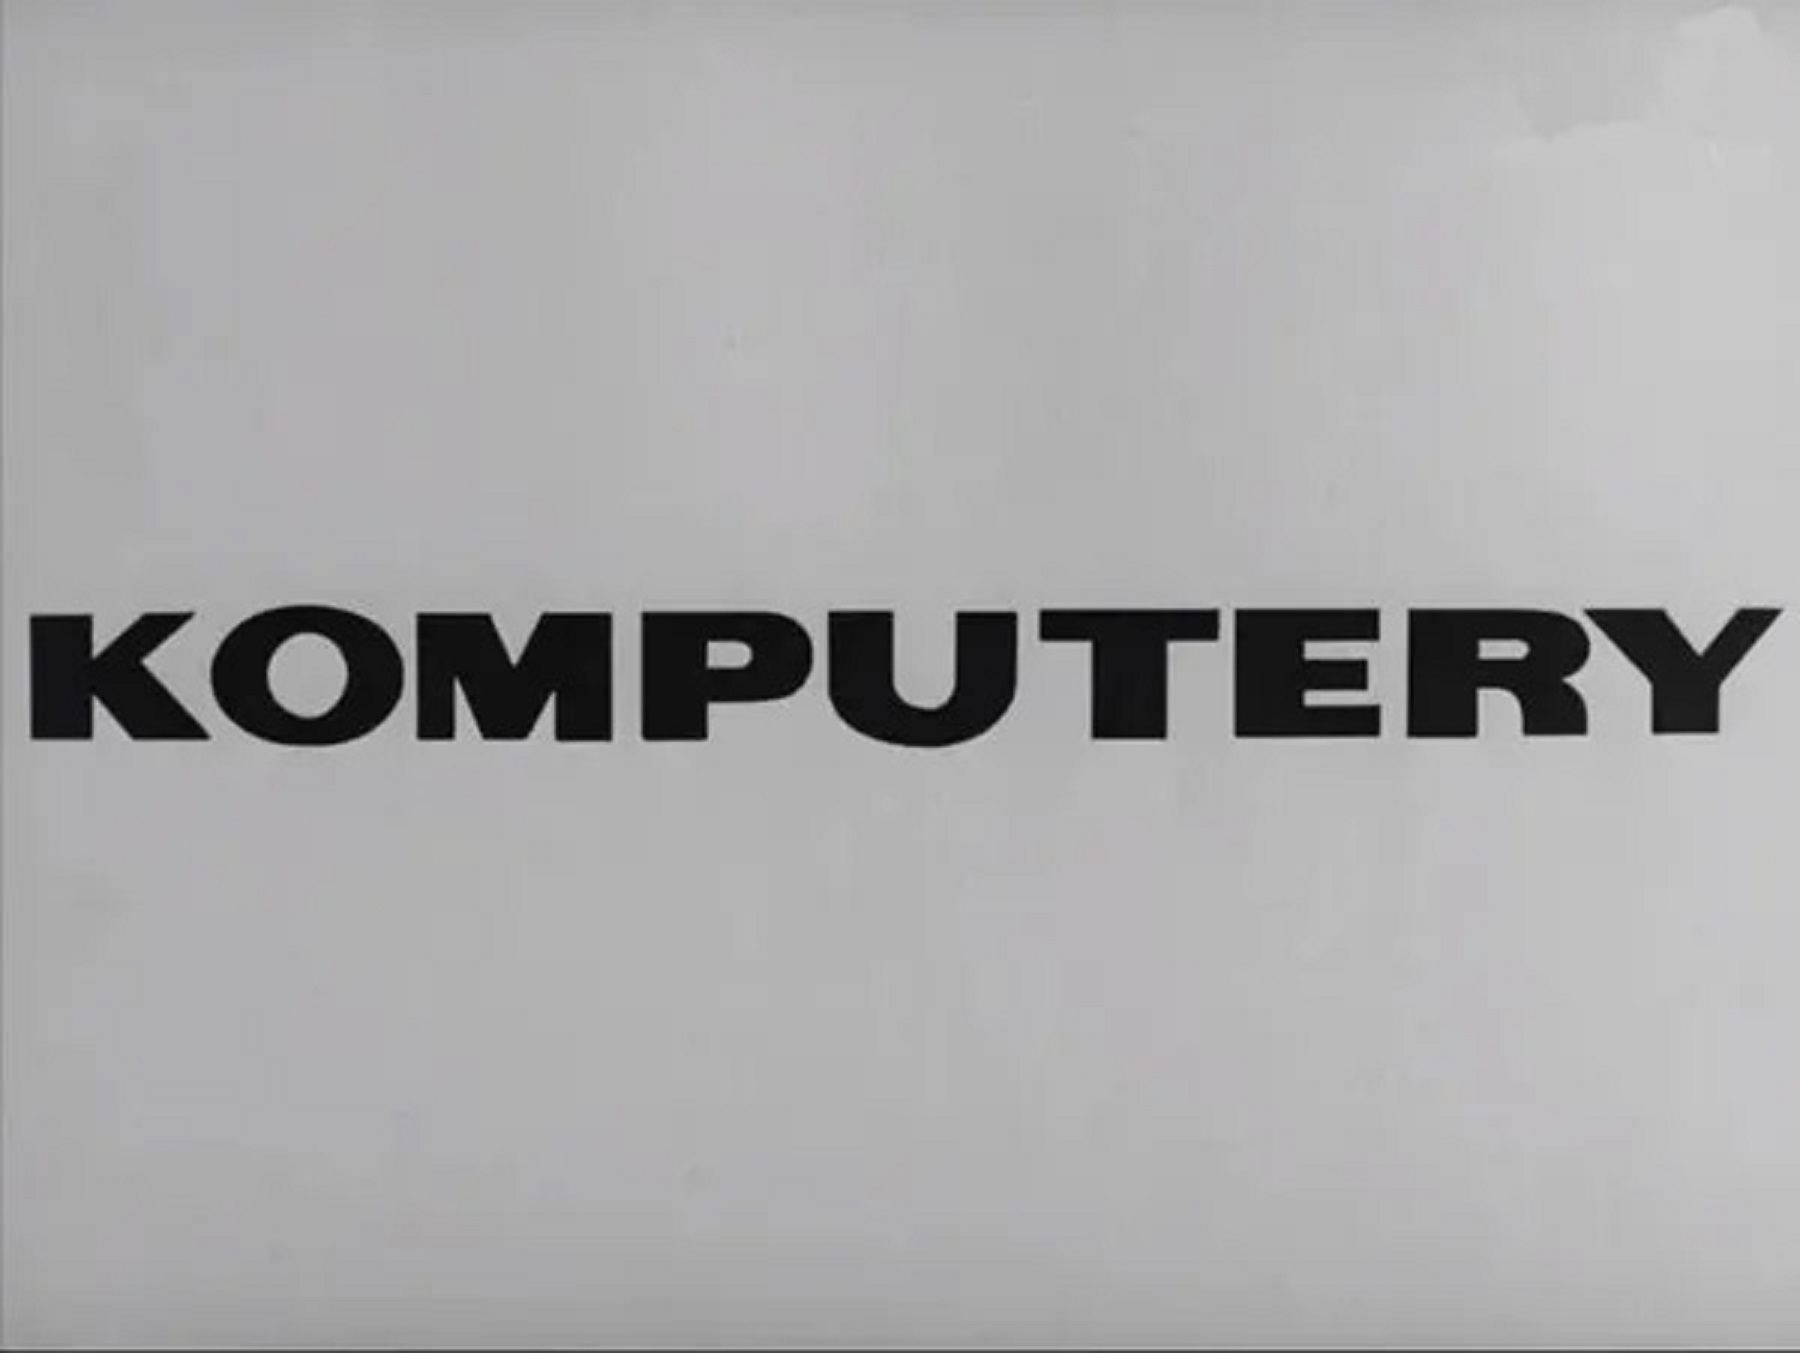 Komputery